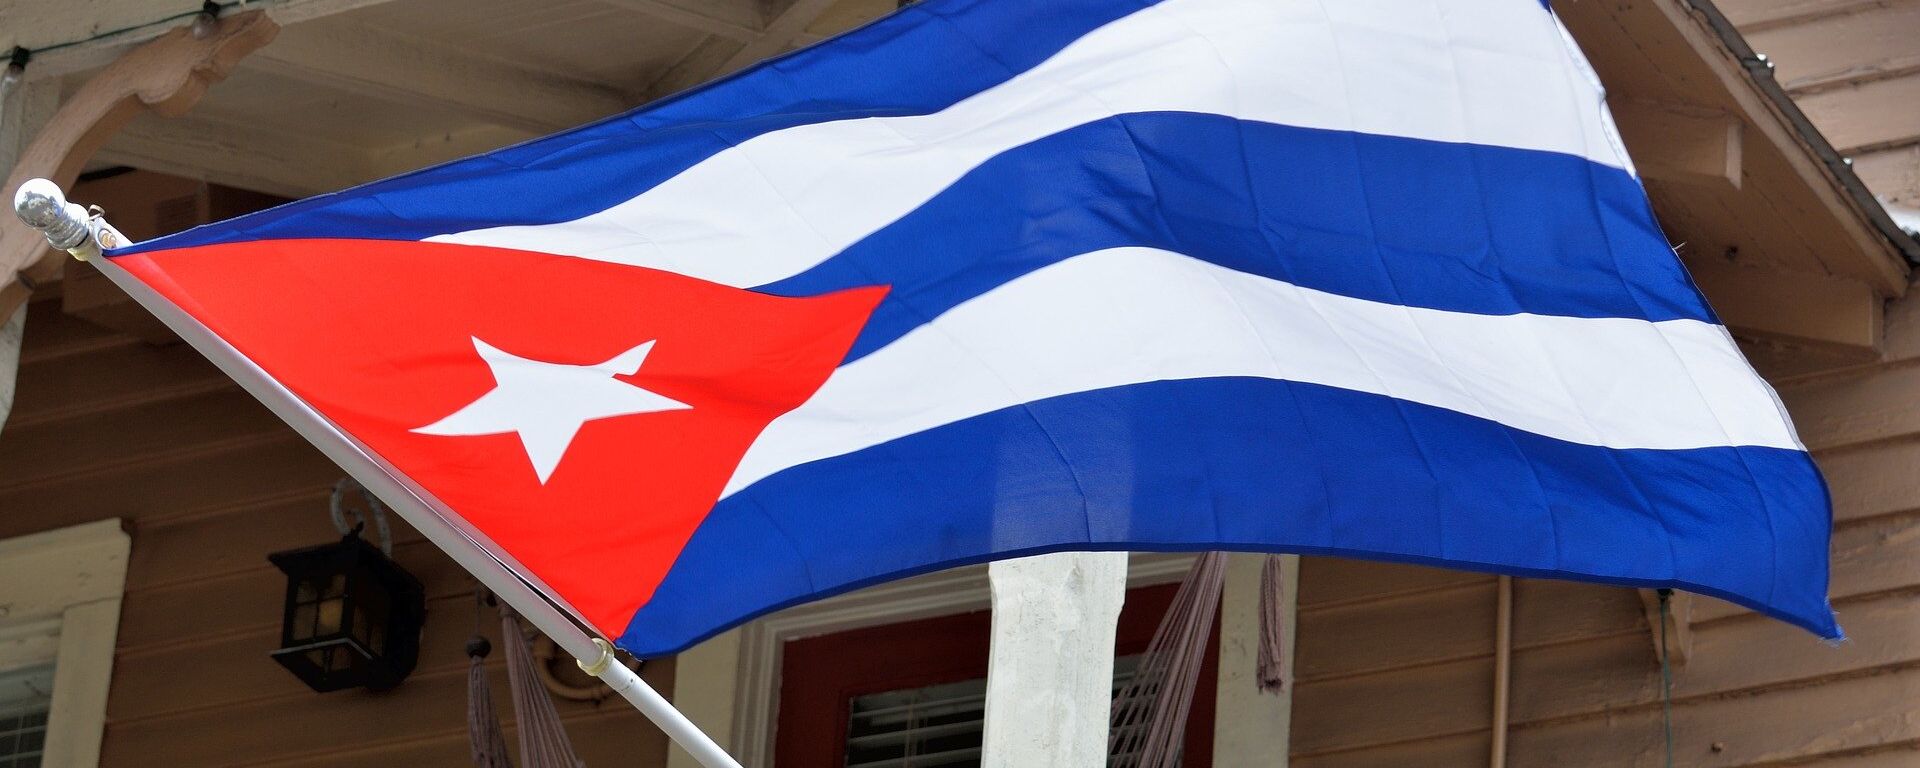 La bandera de Cuba - Sputnik Mundo, 1920, 13.07.2021